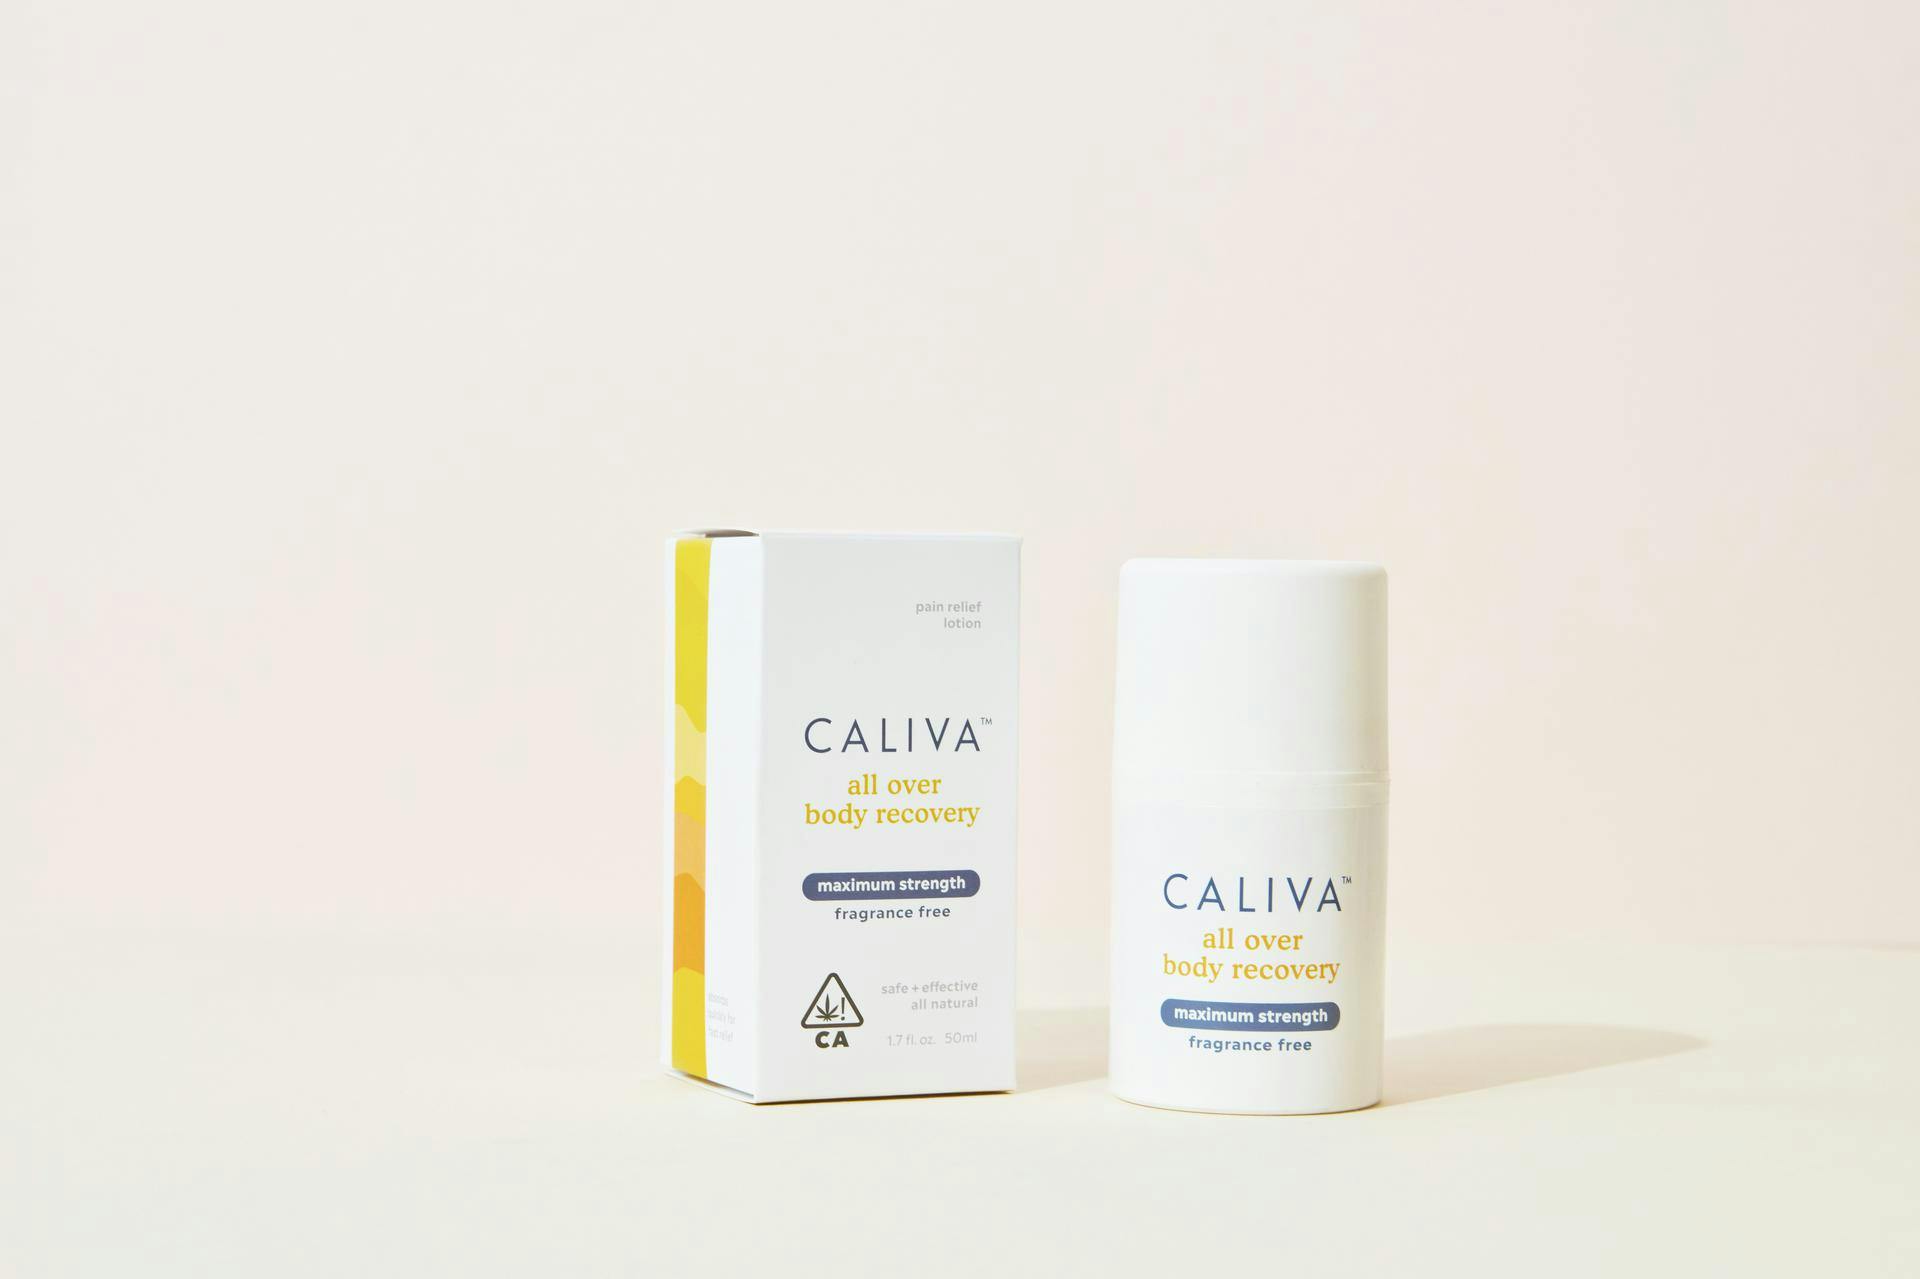 Caliva all over body relief cannabis CBD lotion